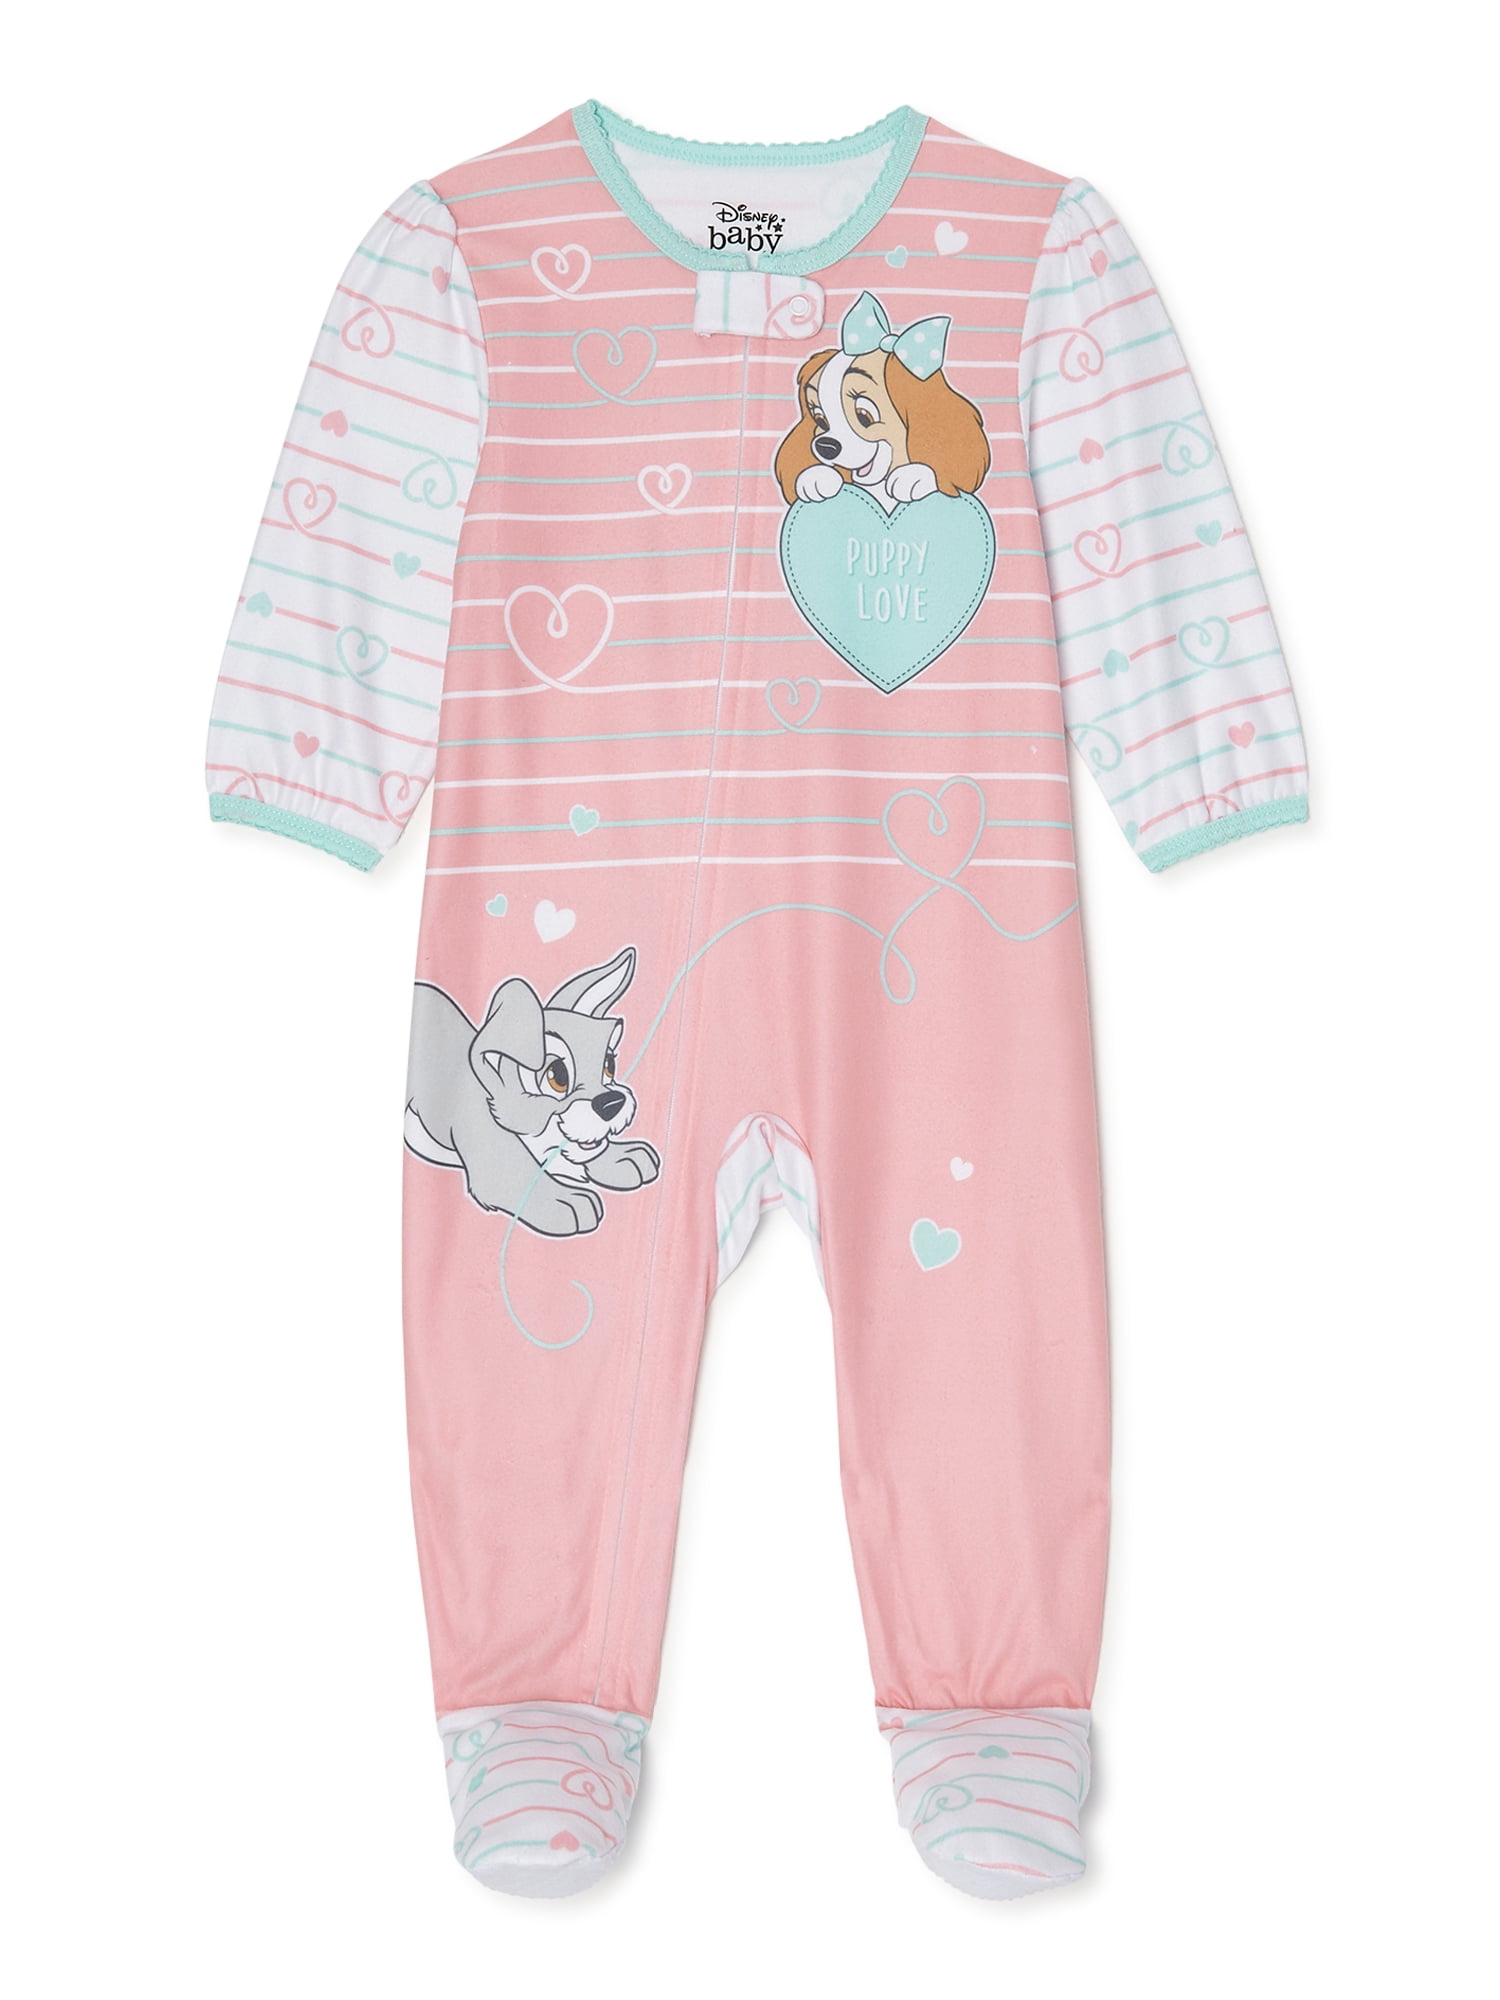 2T Monkey NWT Child of Mine by Carters Toddler Girls Fleece Sleeper Pajama's 